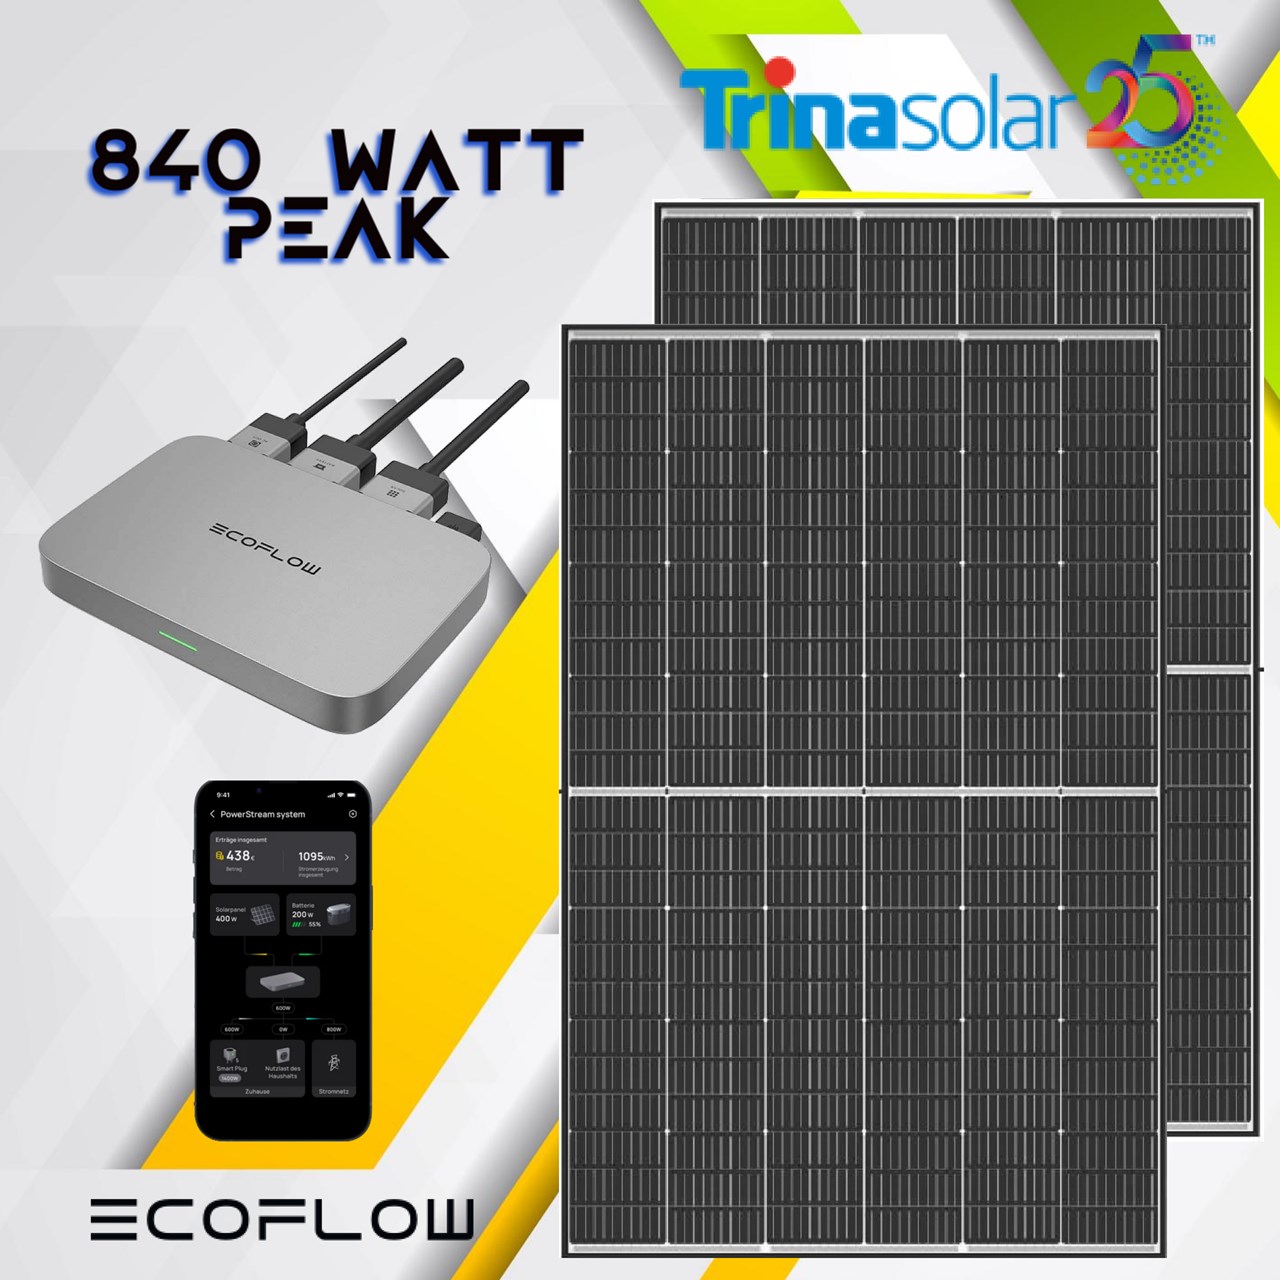 SOLARTEKK - photovoltaik Produkt-Beispiele Trina Solar Balkonkraftwerk Set 840 Watt